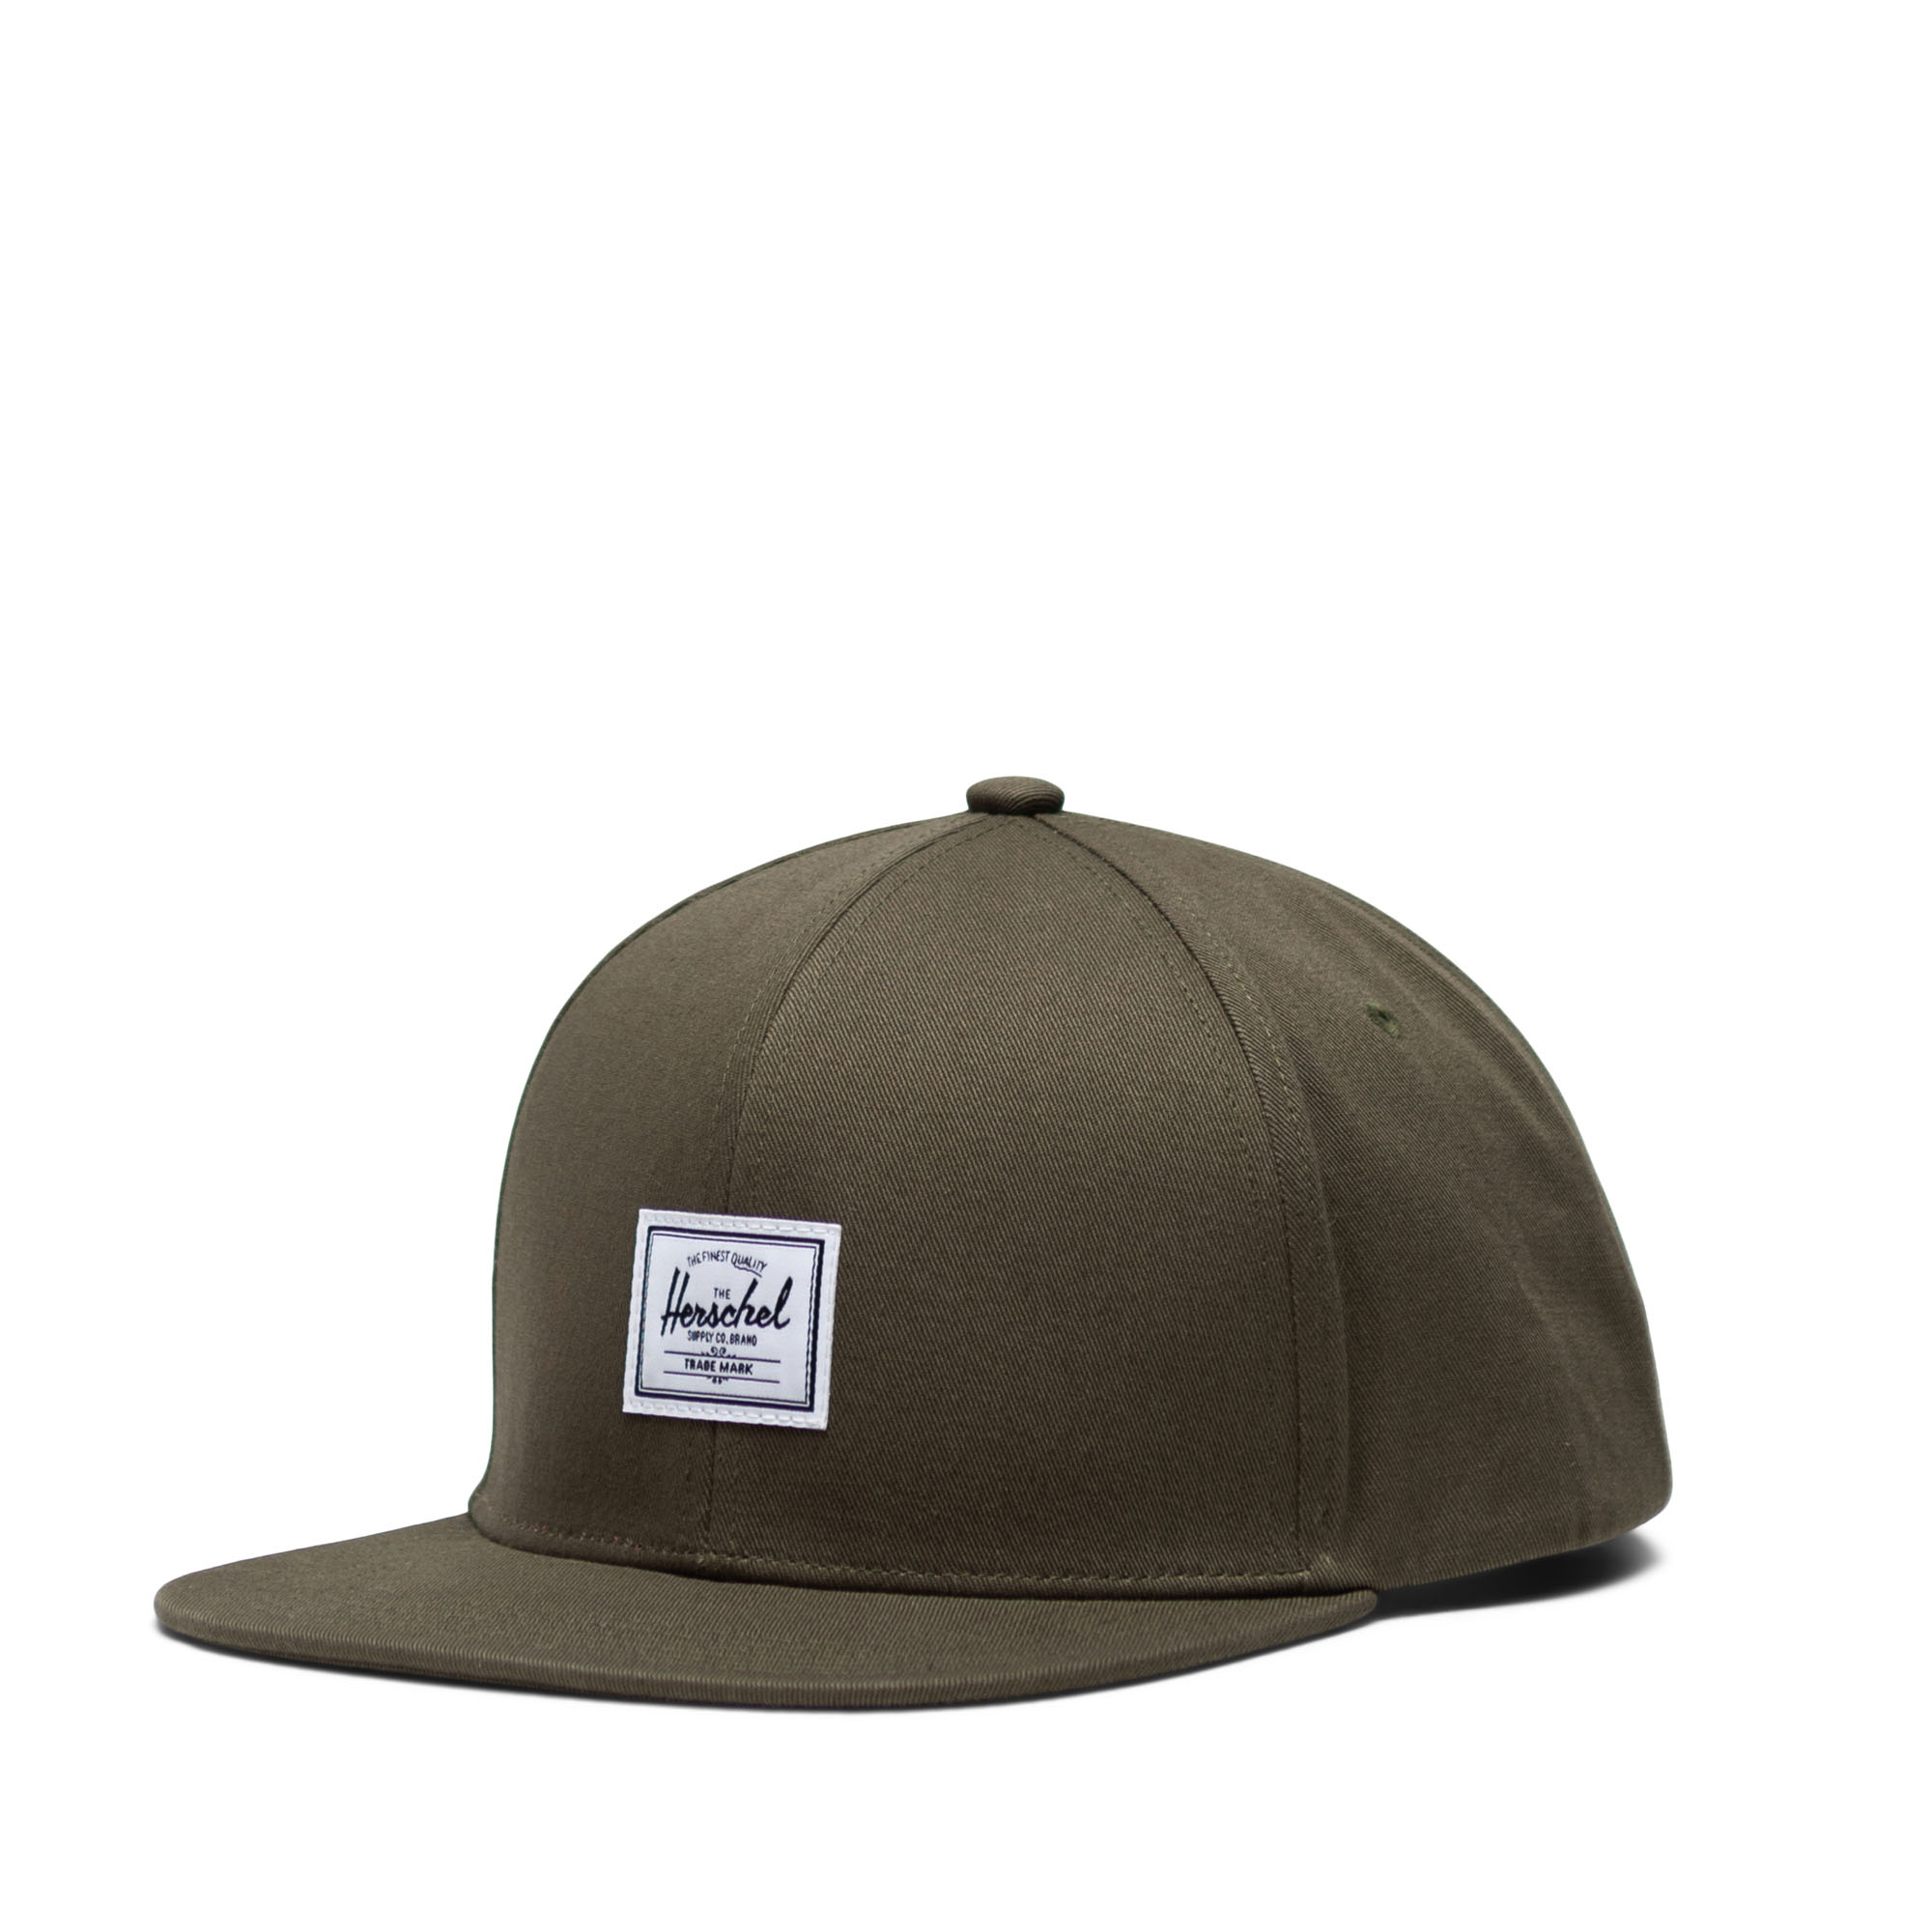 Herschel Whaler Snapback Adjustable Baseball Cap Hat One Size 